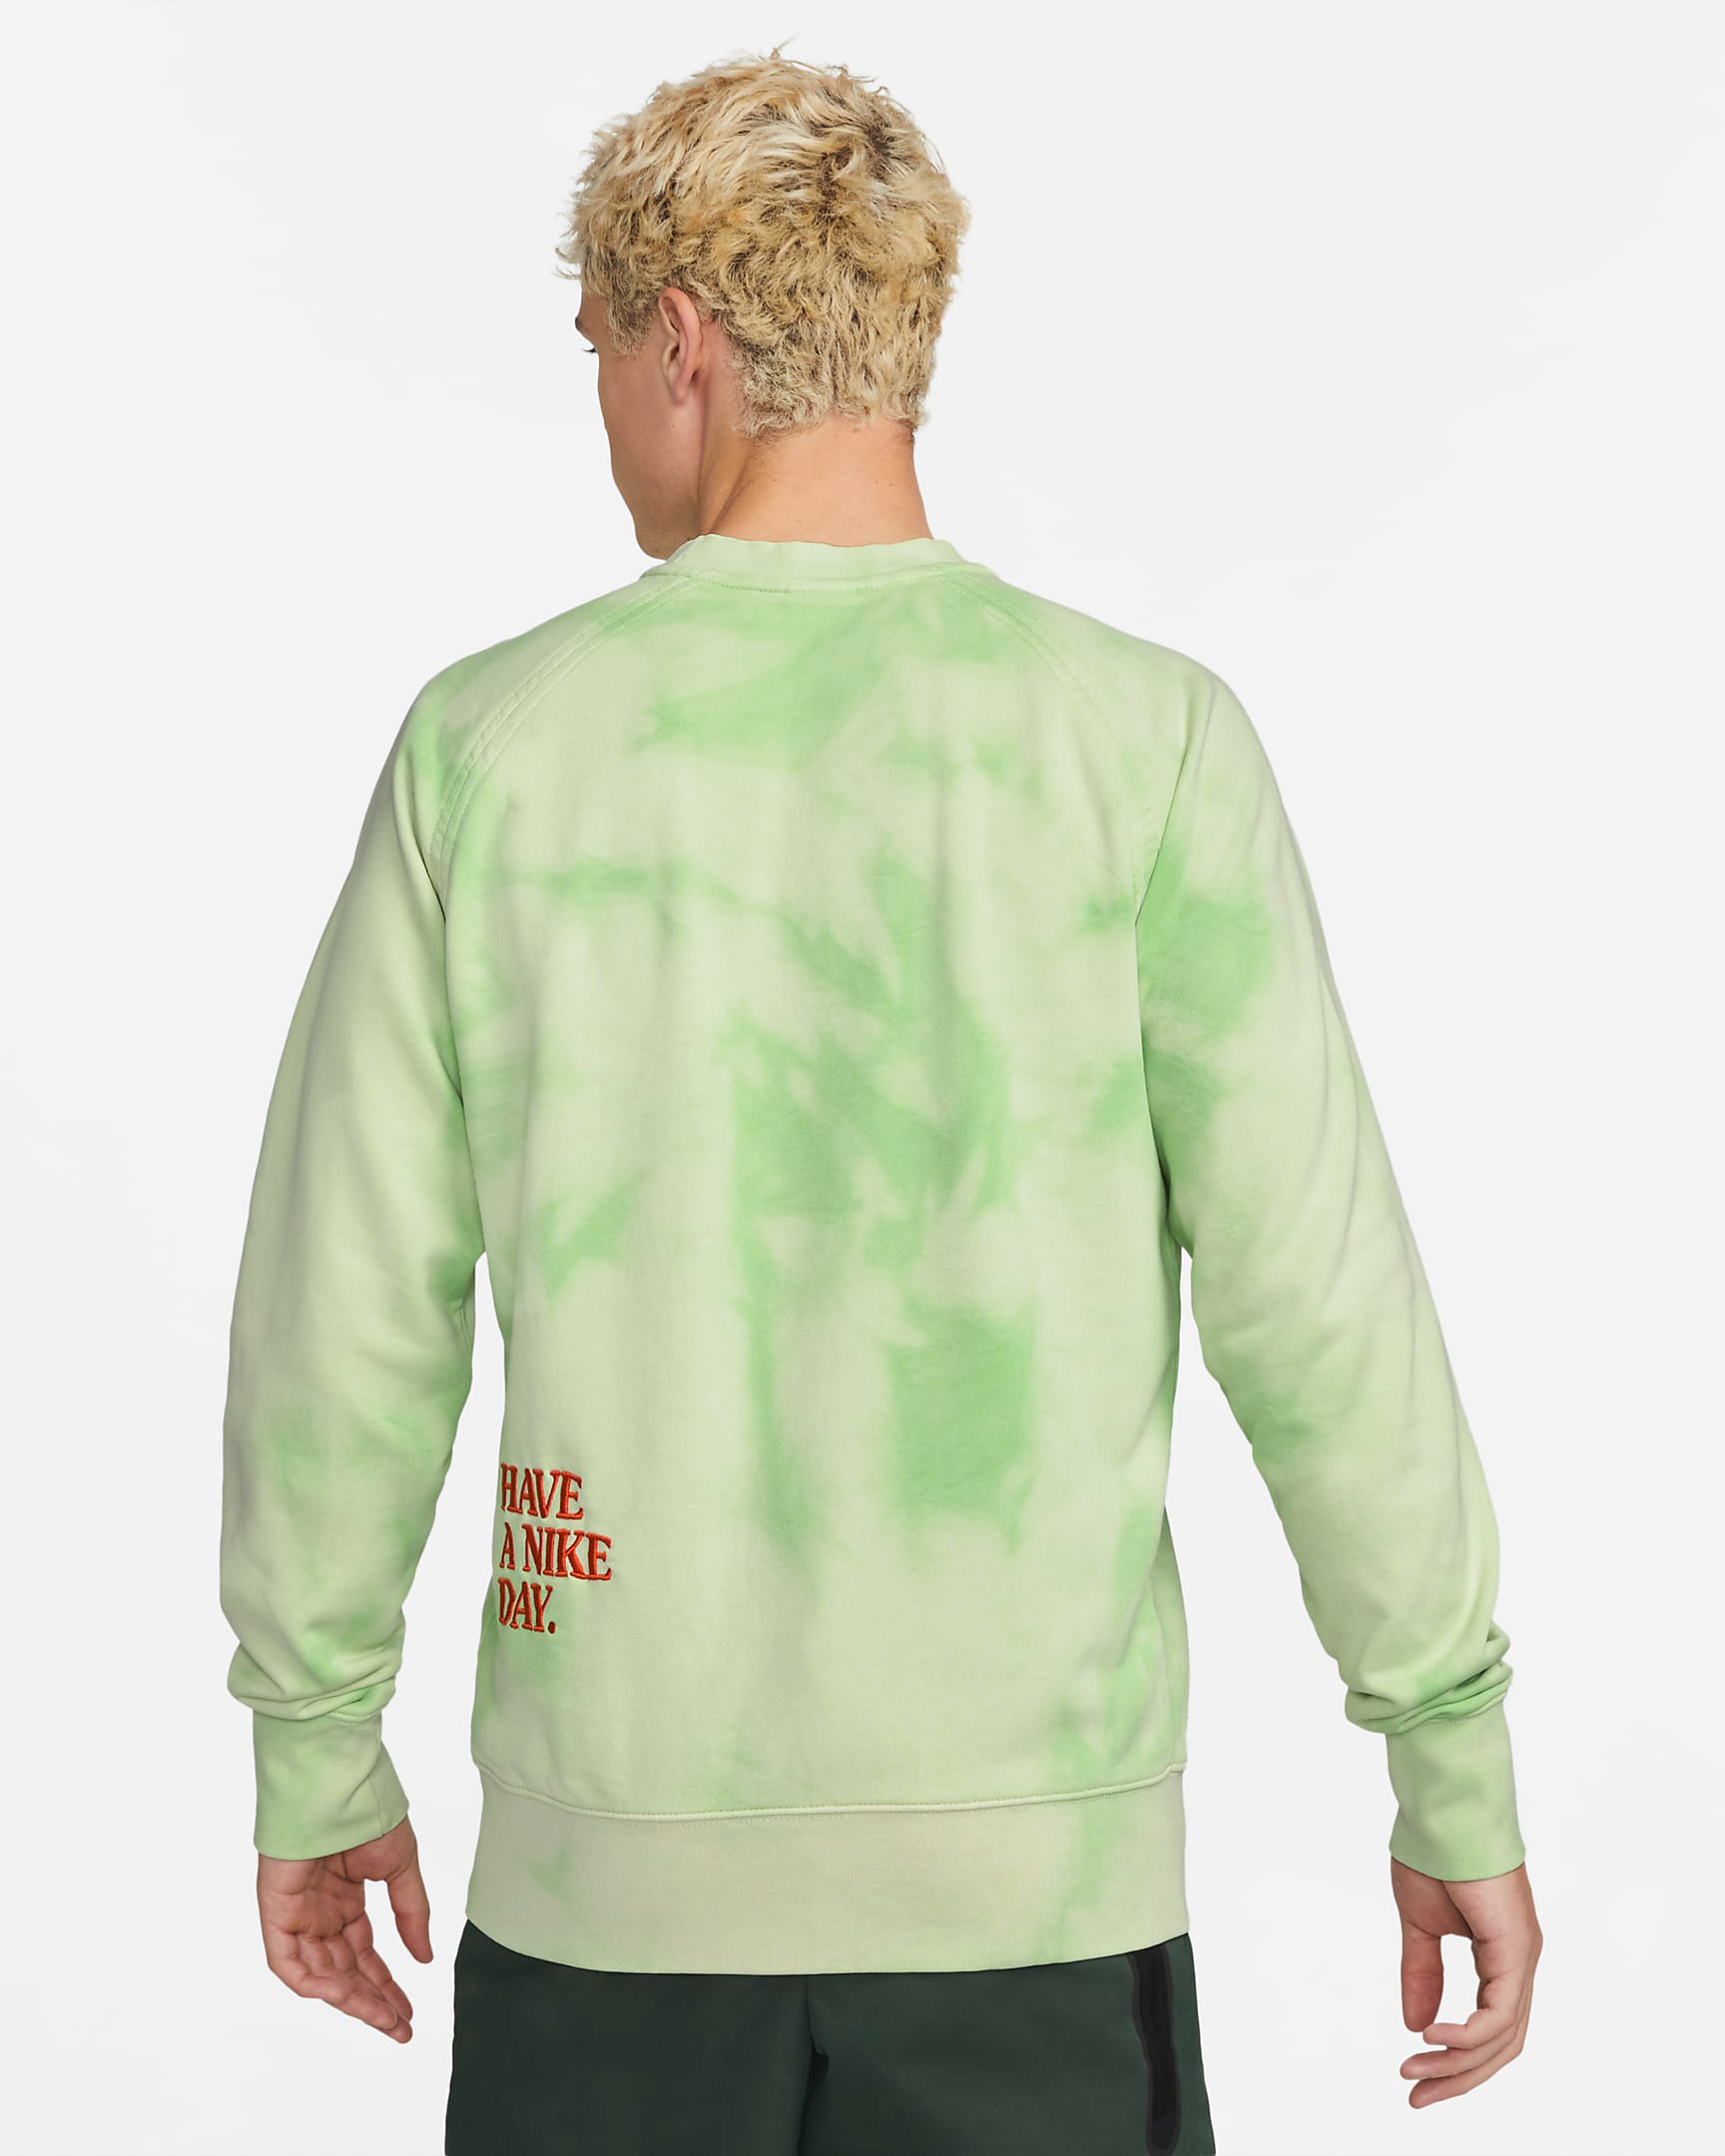 nike-vivid-green-nike-day-sweatshirt-2